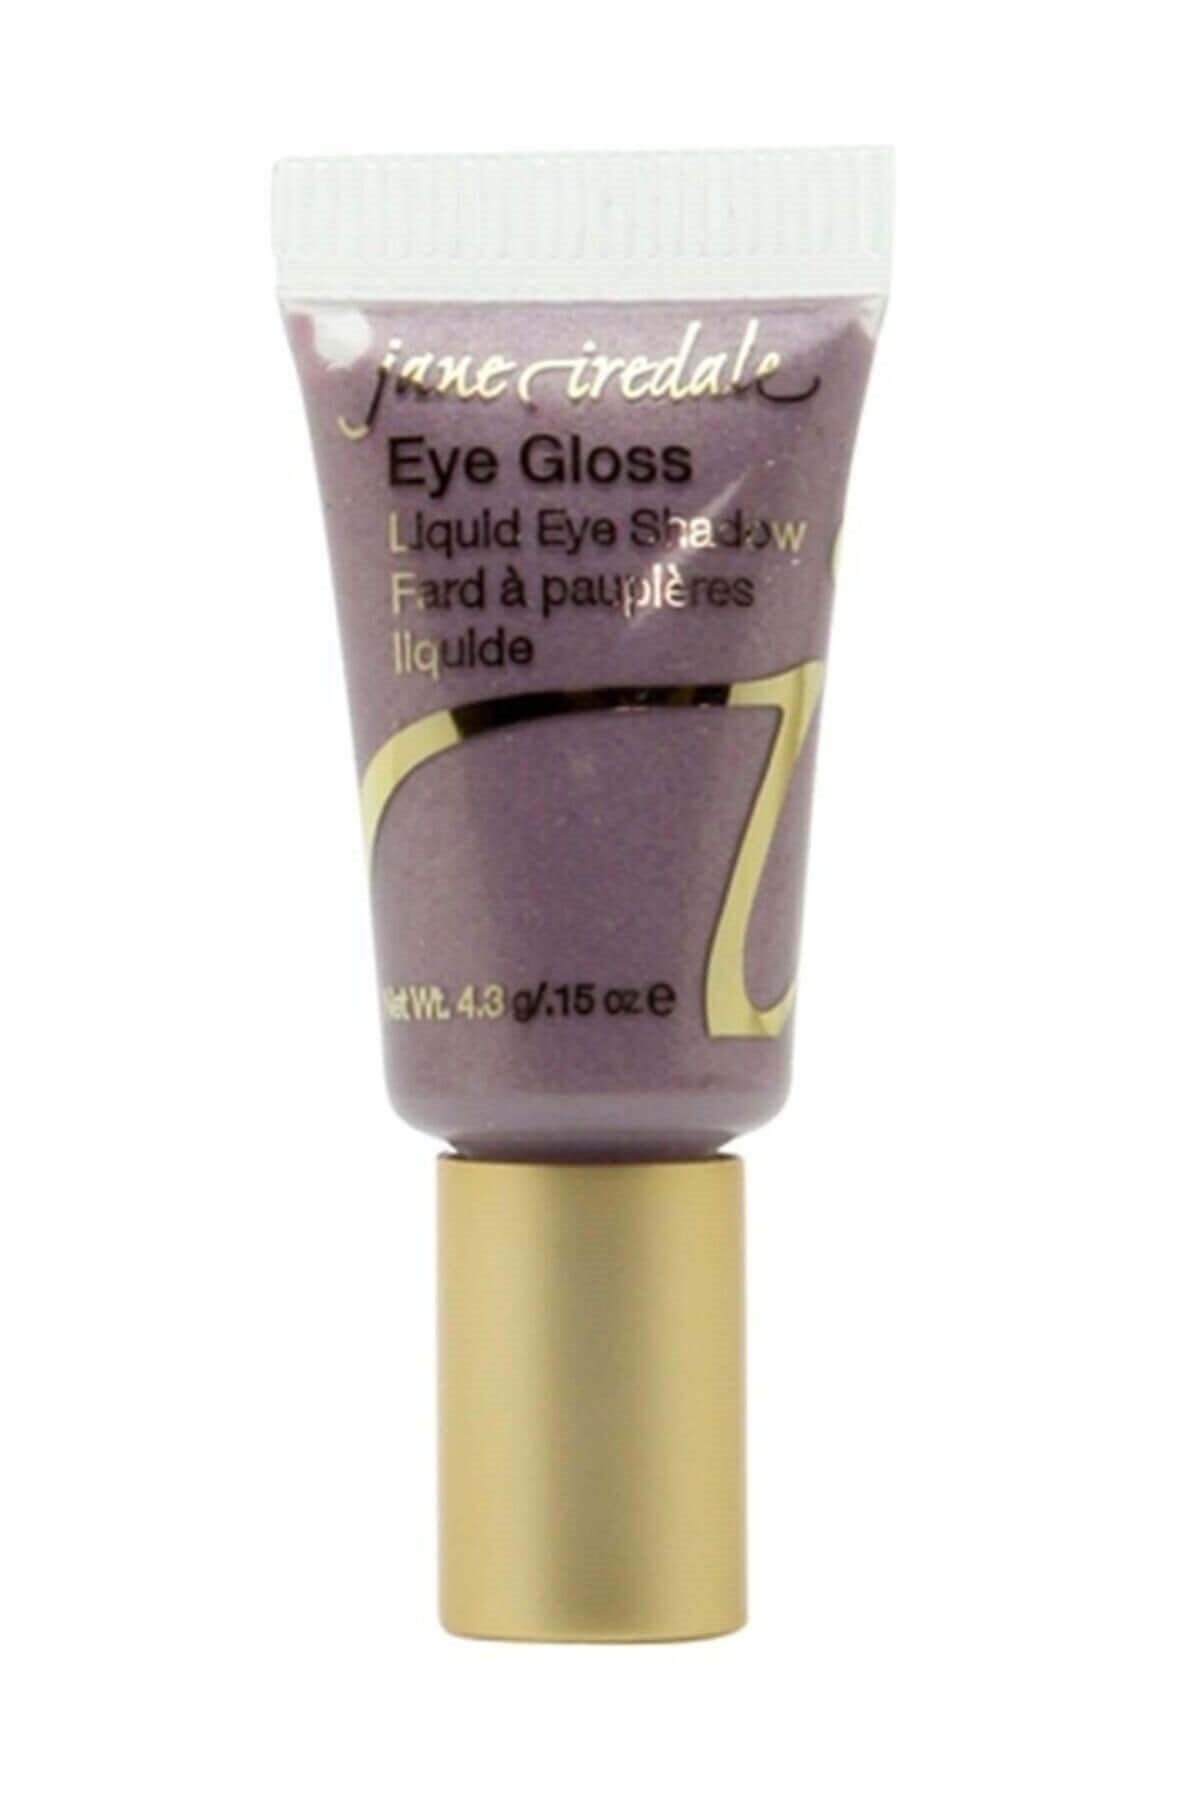 Jane Iredale Lila Tonlarında Likit Göz Farı Eye Gloss / Lilac Silk 4,3 gr  Fiyatları | Dermosiparis.com